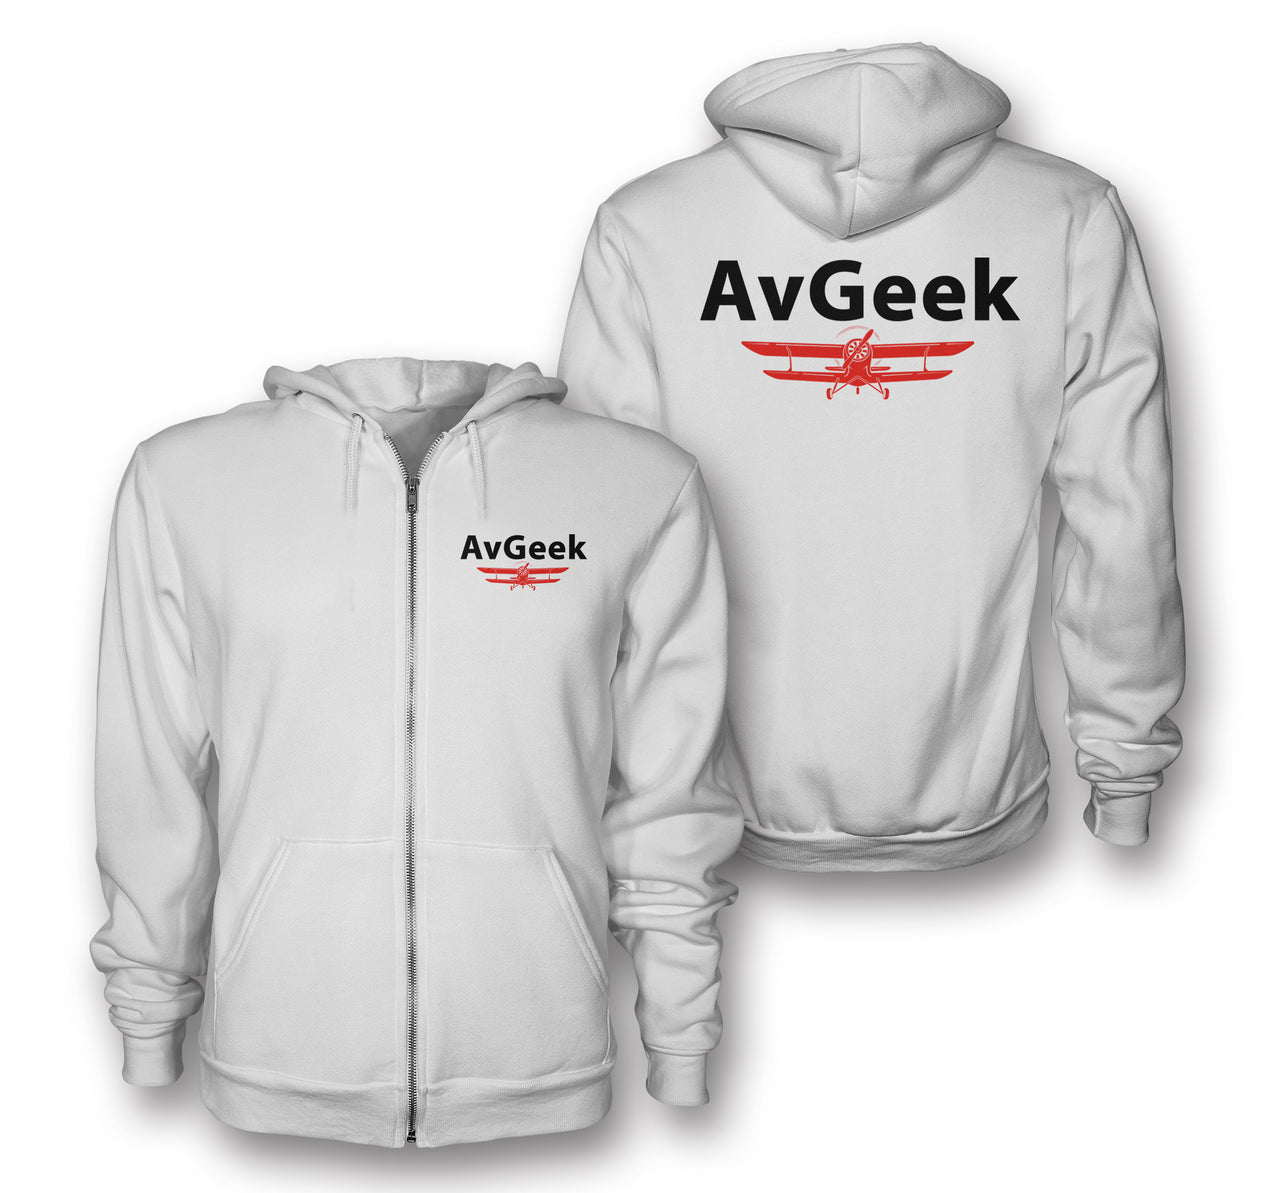 Avgeek Designed Zipped Hoodies